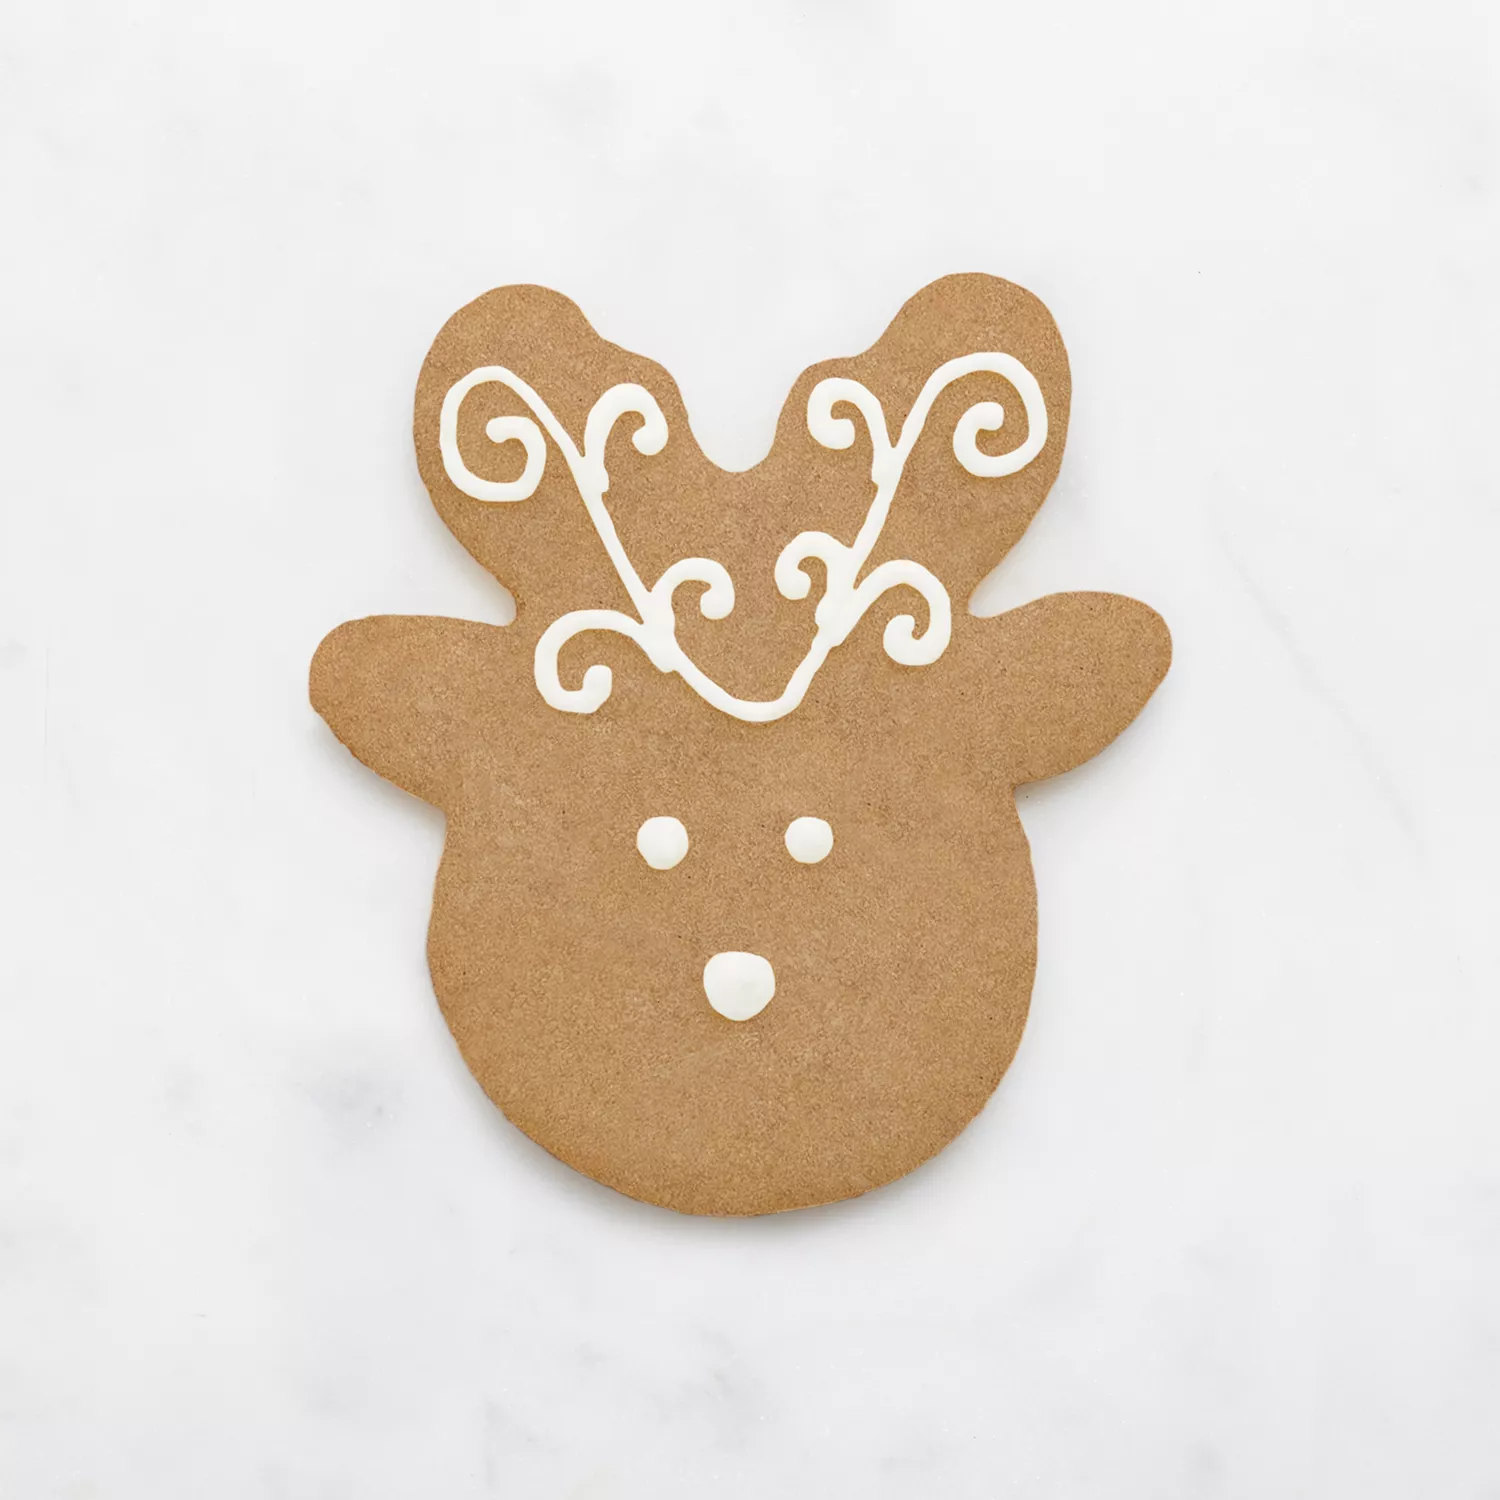 Ann Clark 4 Cookie Cutter | Santa Face by Flour Box Bakery